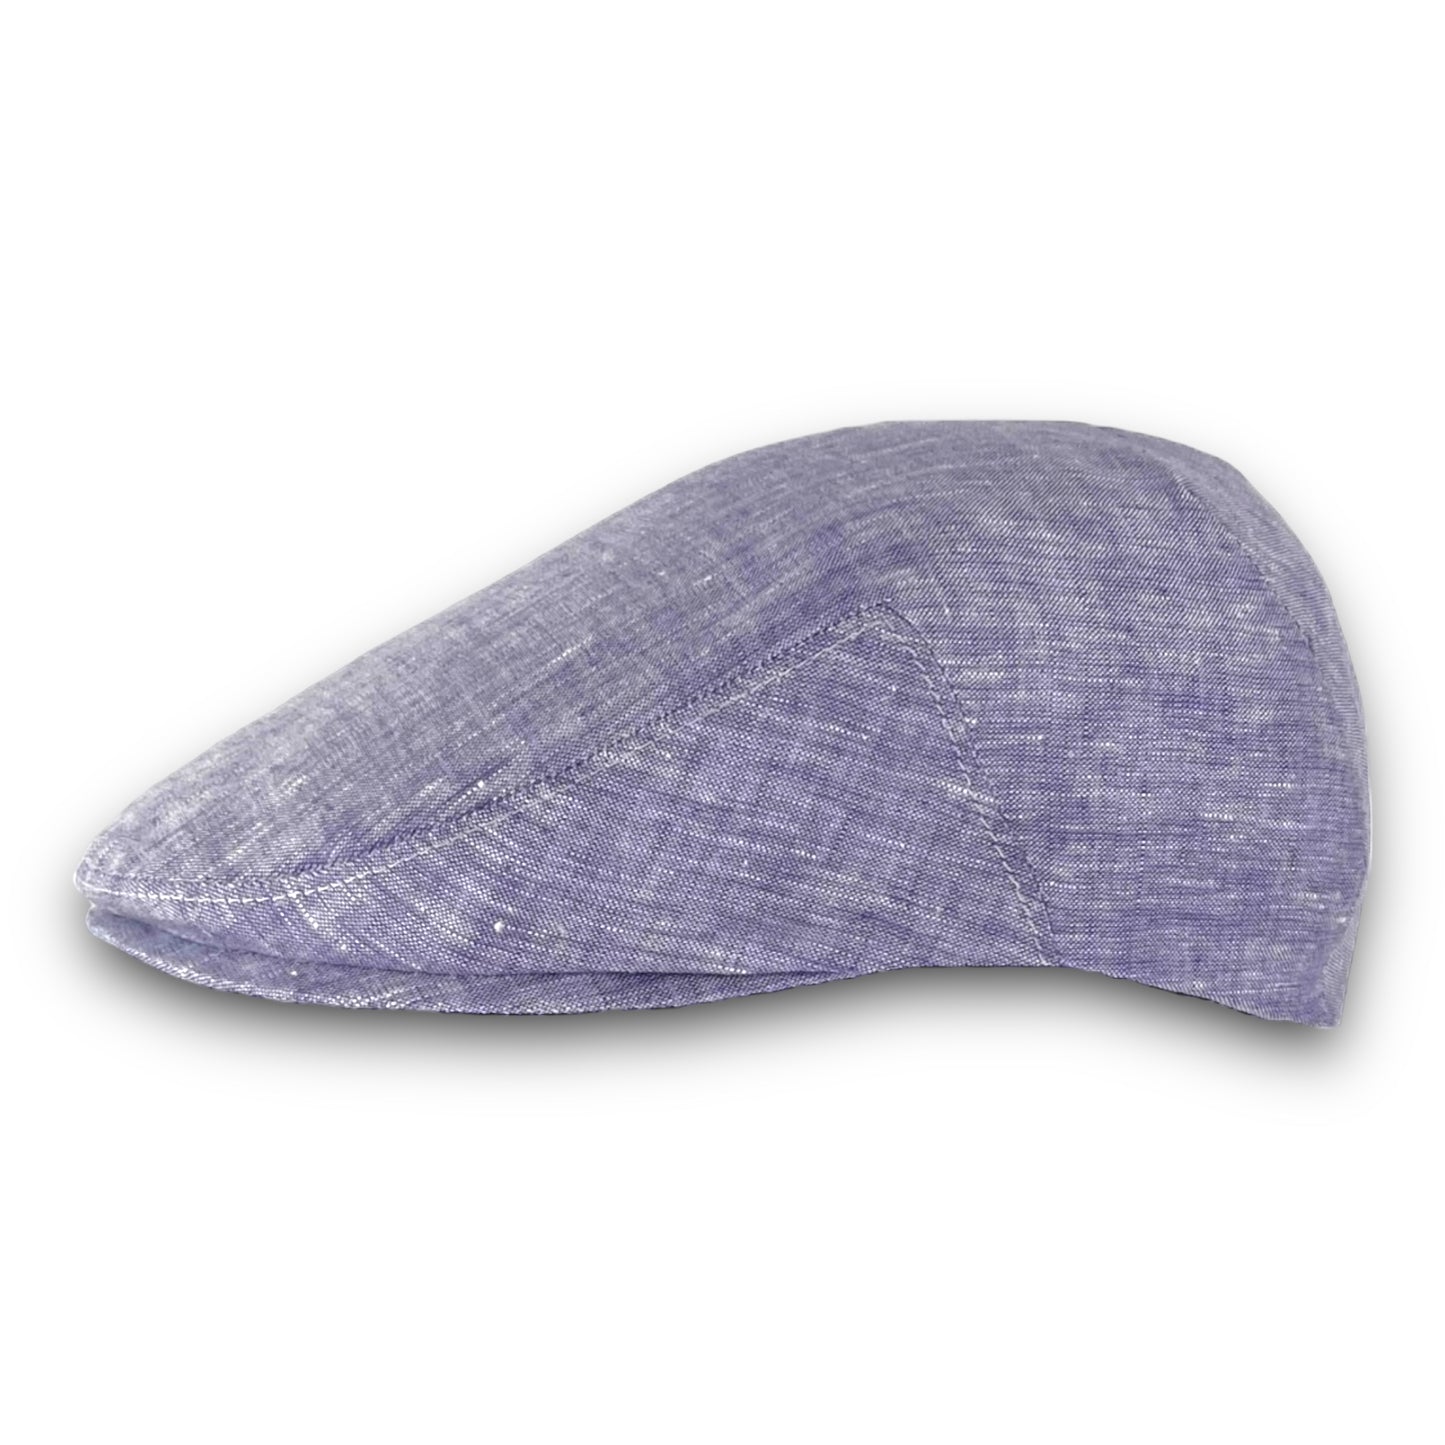 Custom Flat Cap Handmade to Order in Heathered Purple Haze Lightweight Linen Chambray